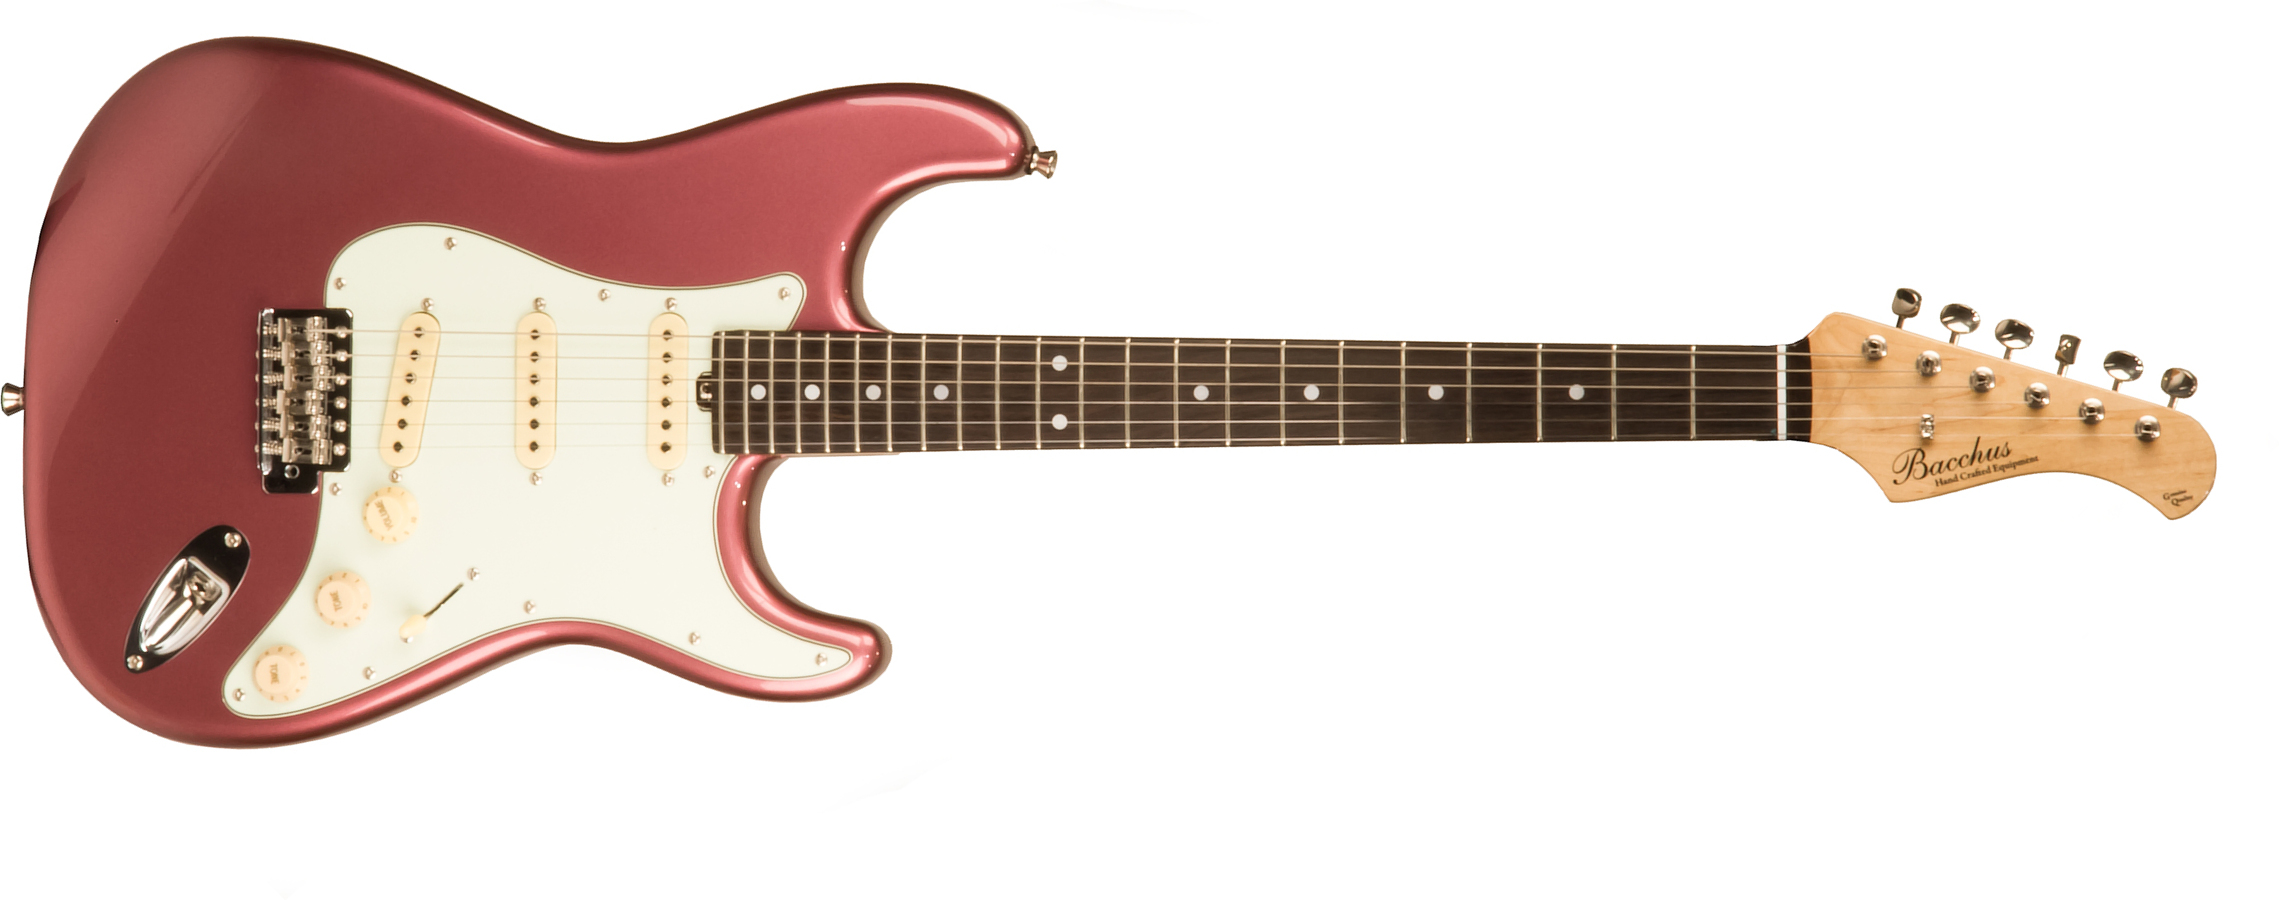 Bacchus Global Bst 650b - Burgundy Mist - E-Gitarre in Str-Form - Main picture